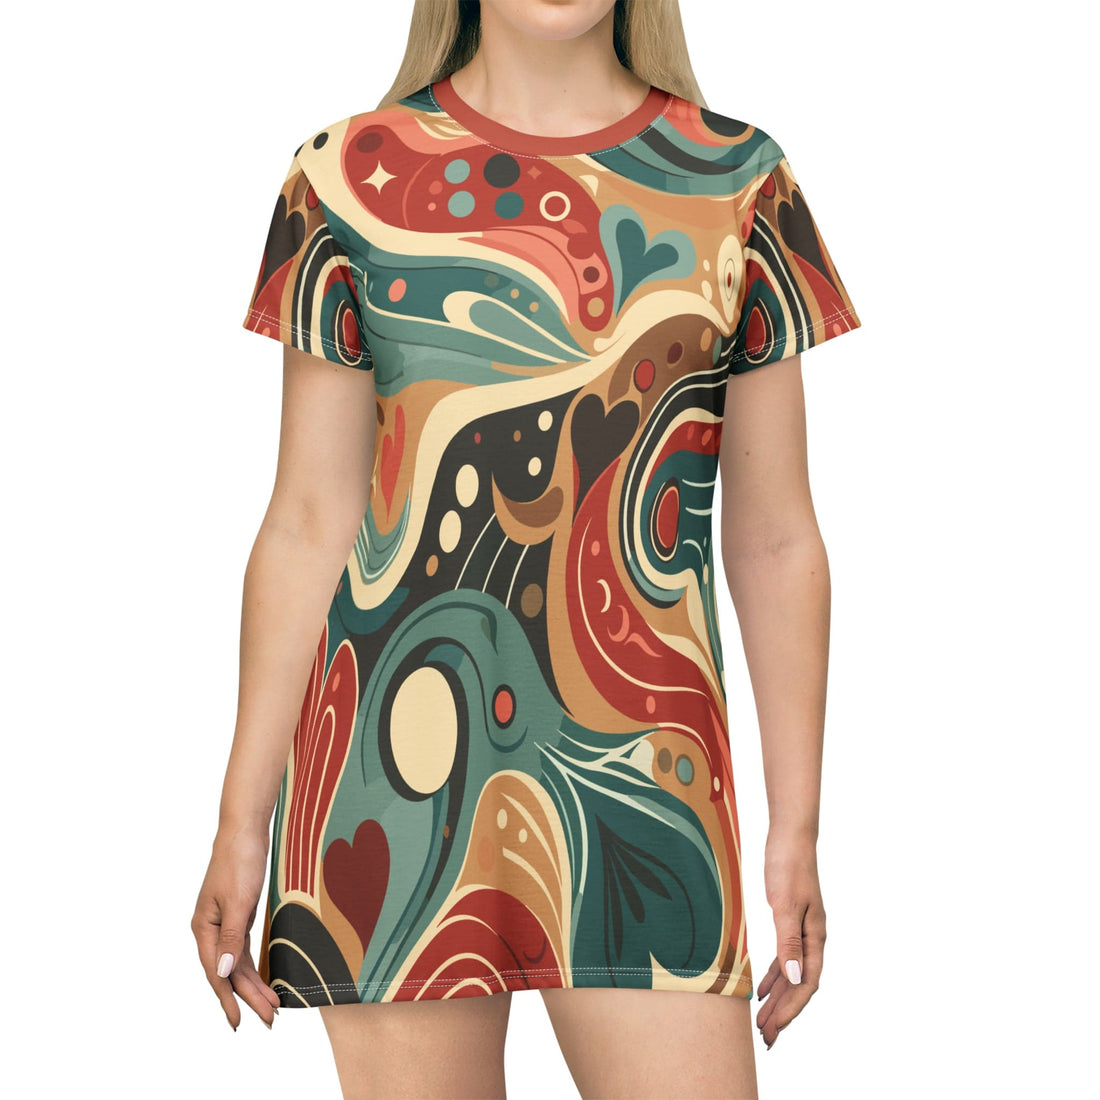 Kate McEnroe New York Mid Mod Retro Swirl T - Shirt Dress, Groovy Hippie Psychedelic Hipster Style Party DressDresses20885766076154020690